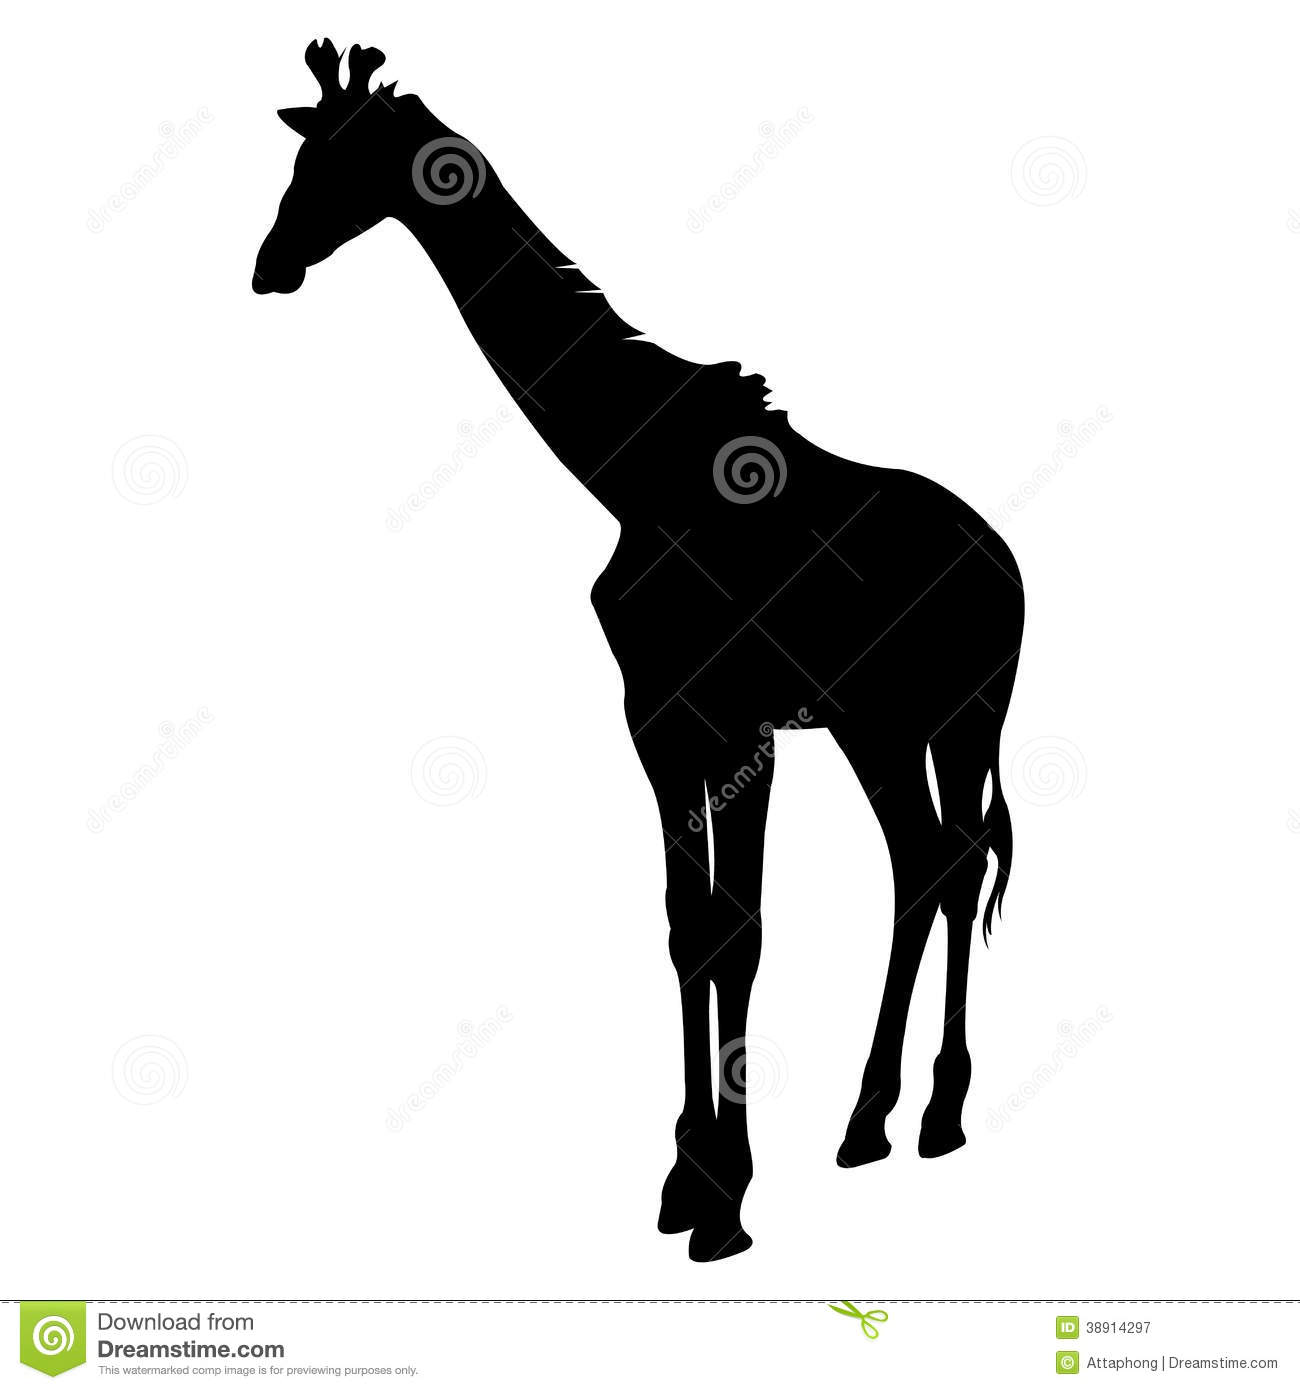 Giraffe Silhouette vector